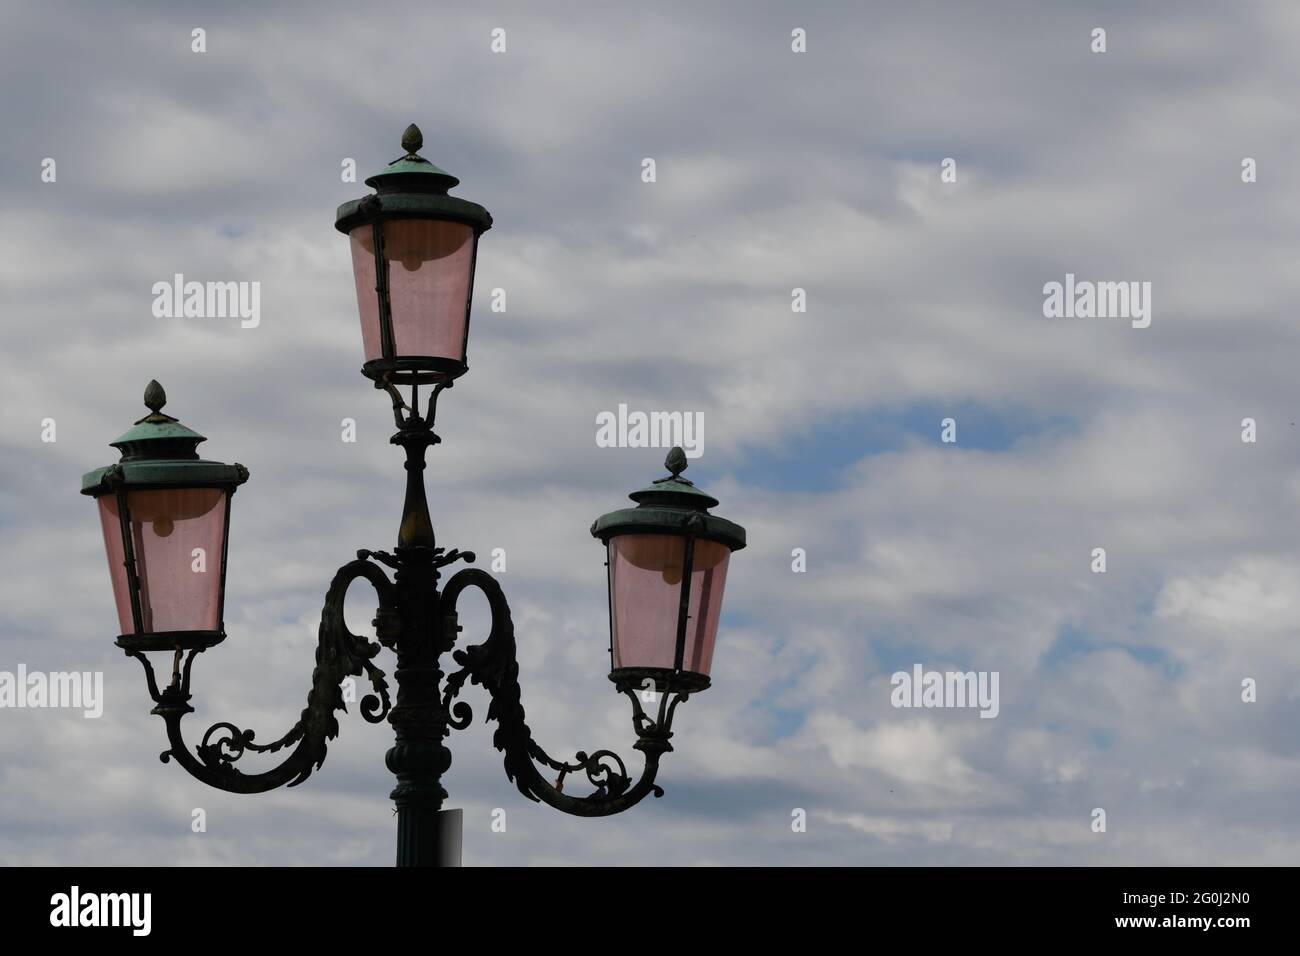 Sestrassenlaterne am Eingang zum Markusplatz in Venedig gegen den bewölkten Himmel fotografiert Foto de stock